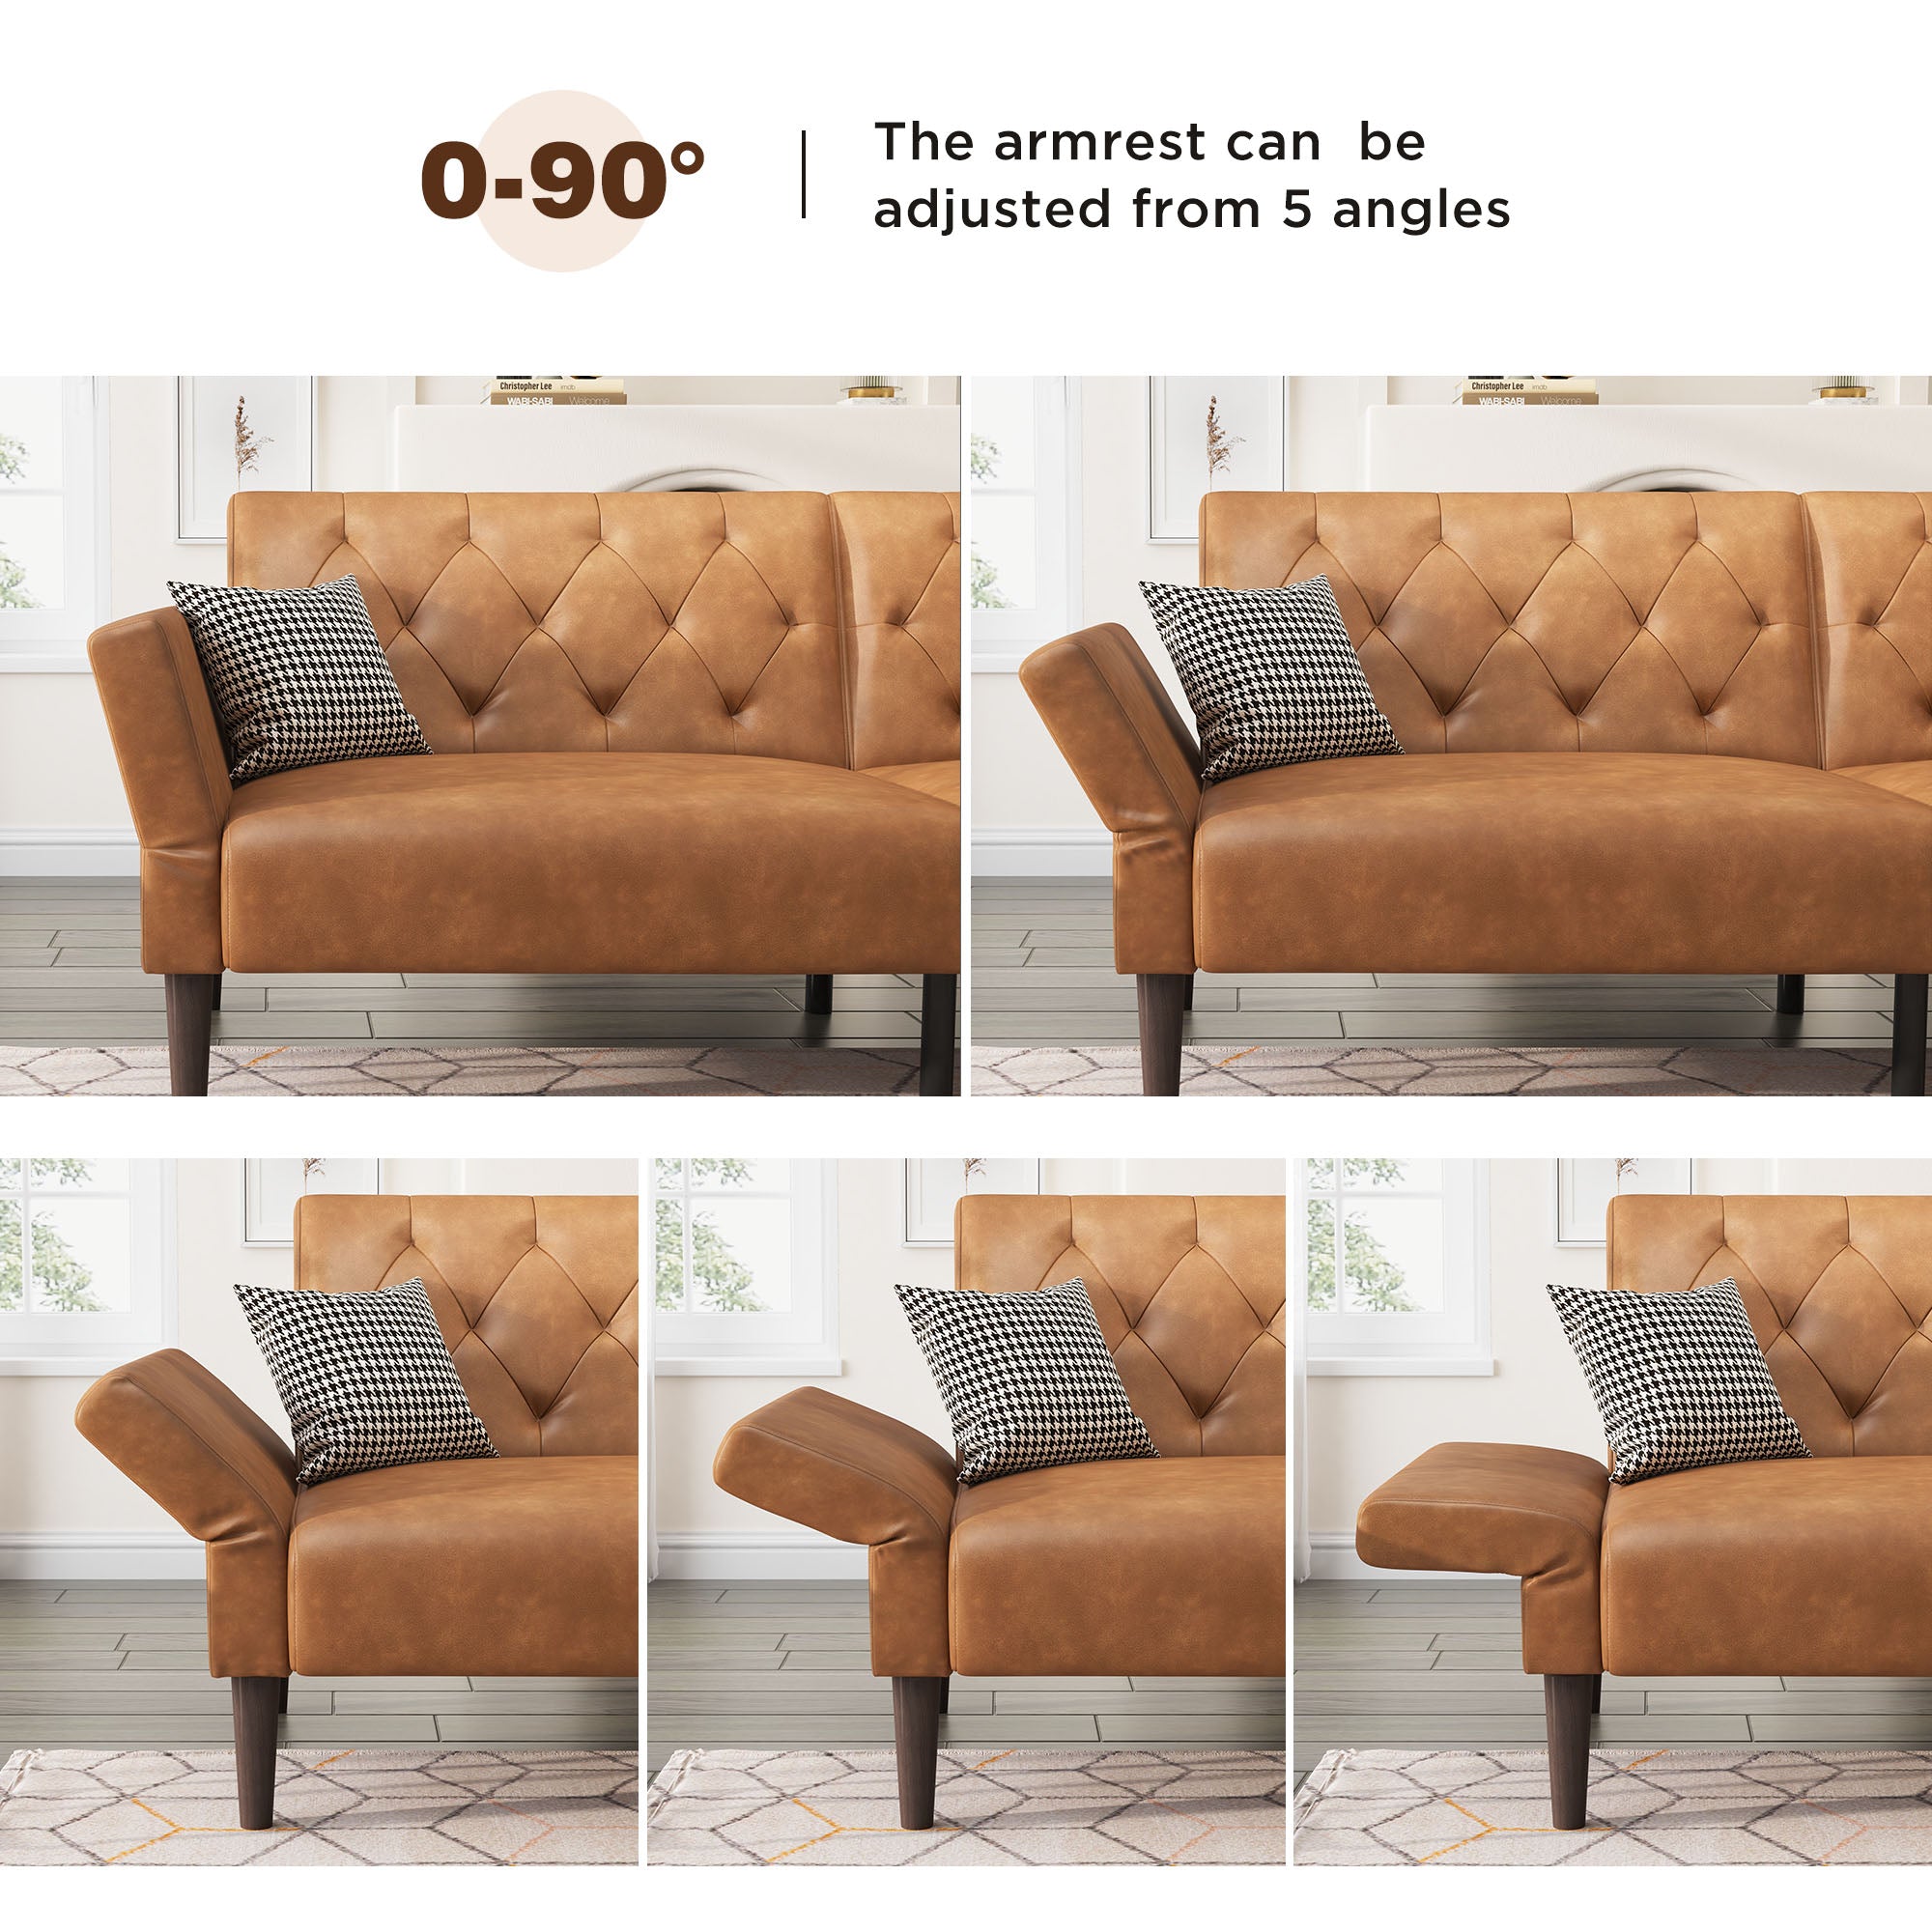 5 Adjustable Angles Armrest for HONBAY PU Leather Futon Sofa